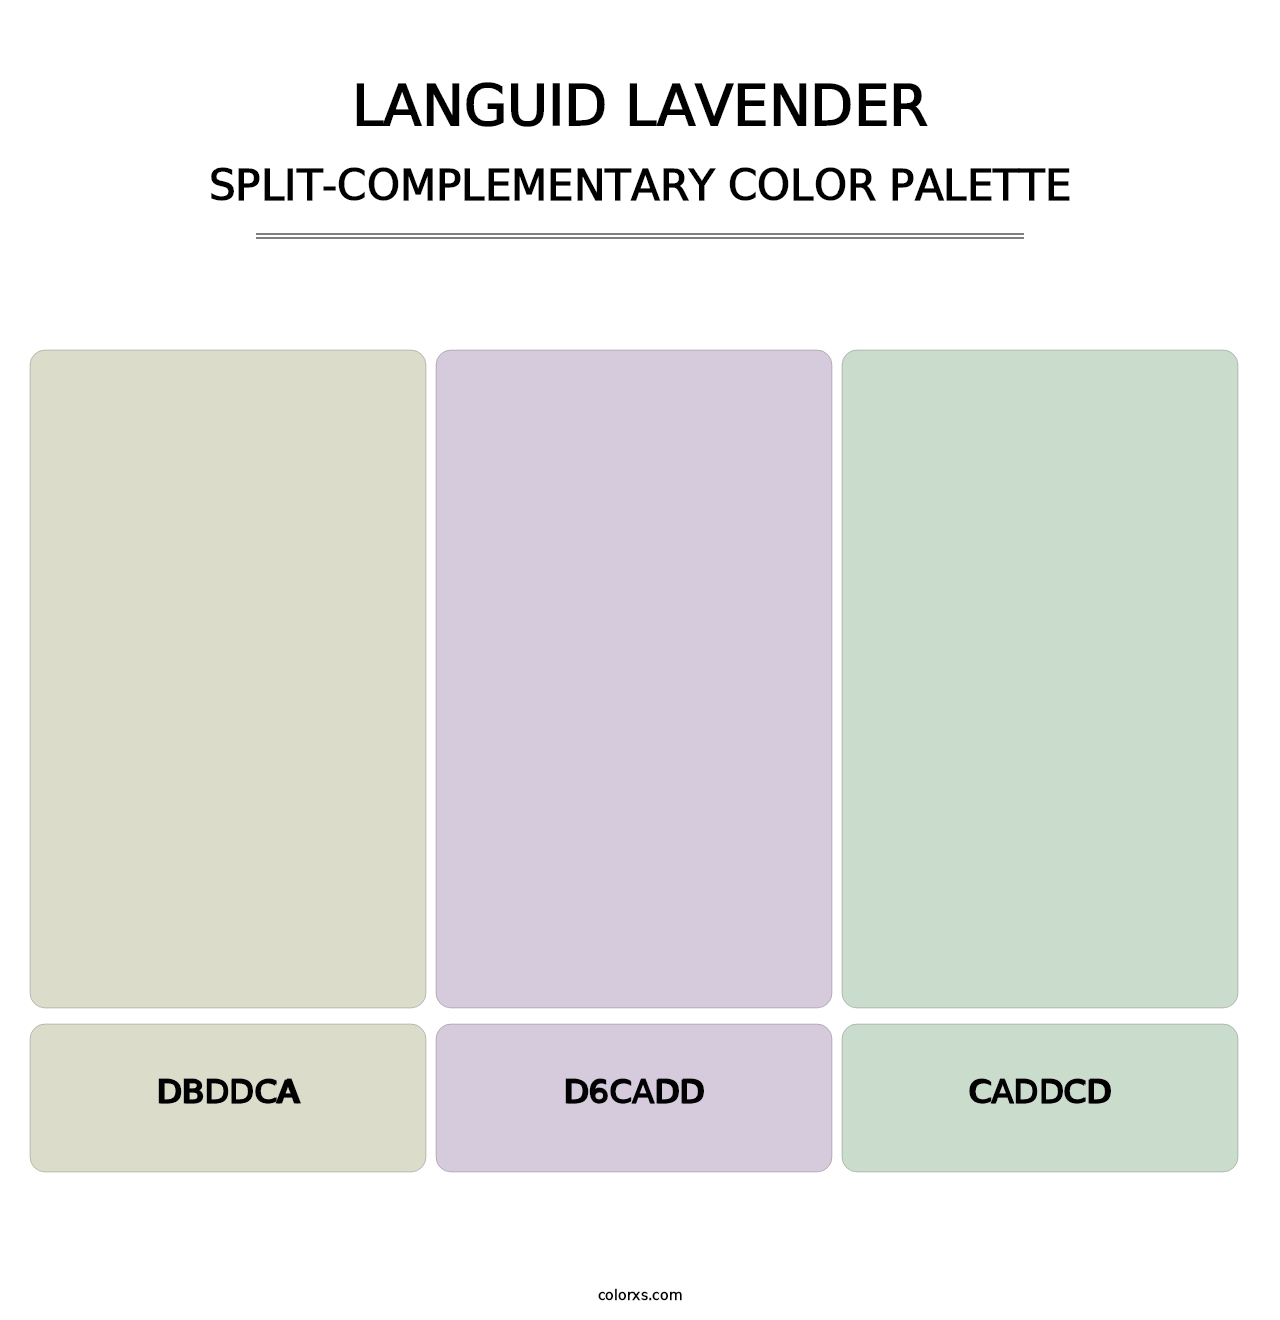 Languid Lavender - Split-Complementary Color Palette